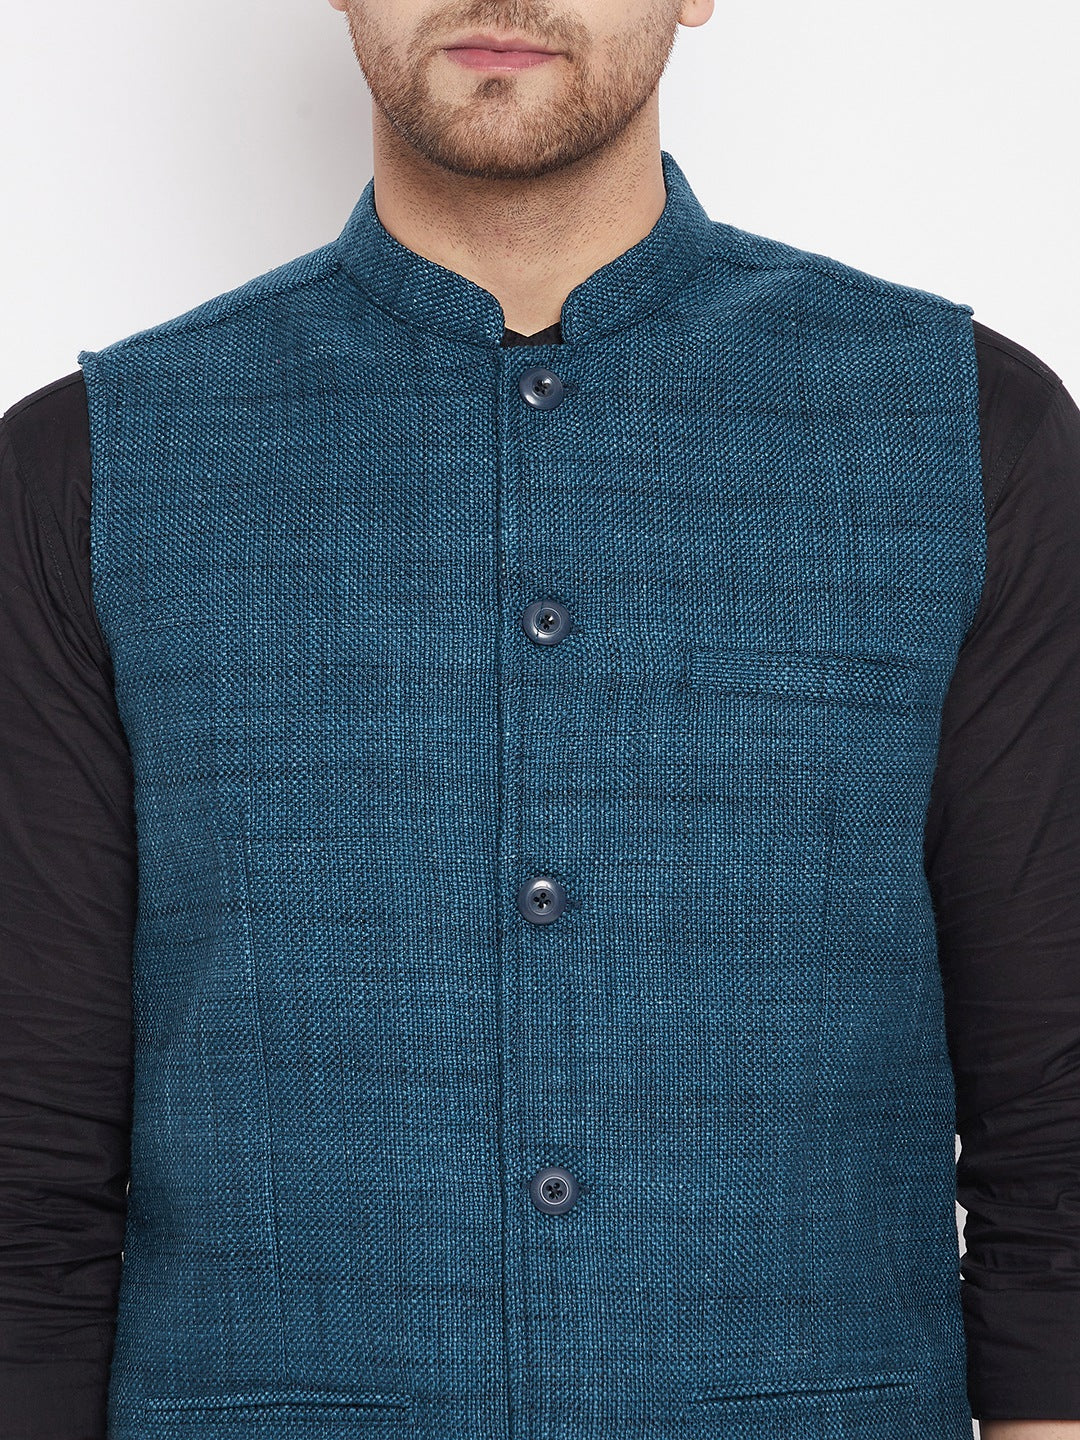 Men's Blue Color Woven Nehru Jacket - Even Apparels